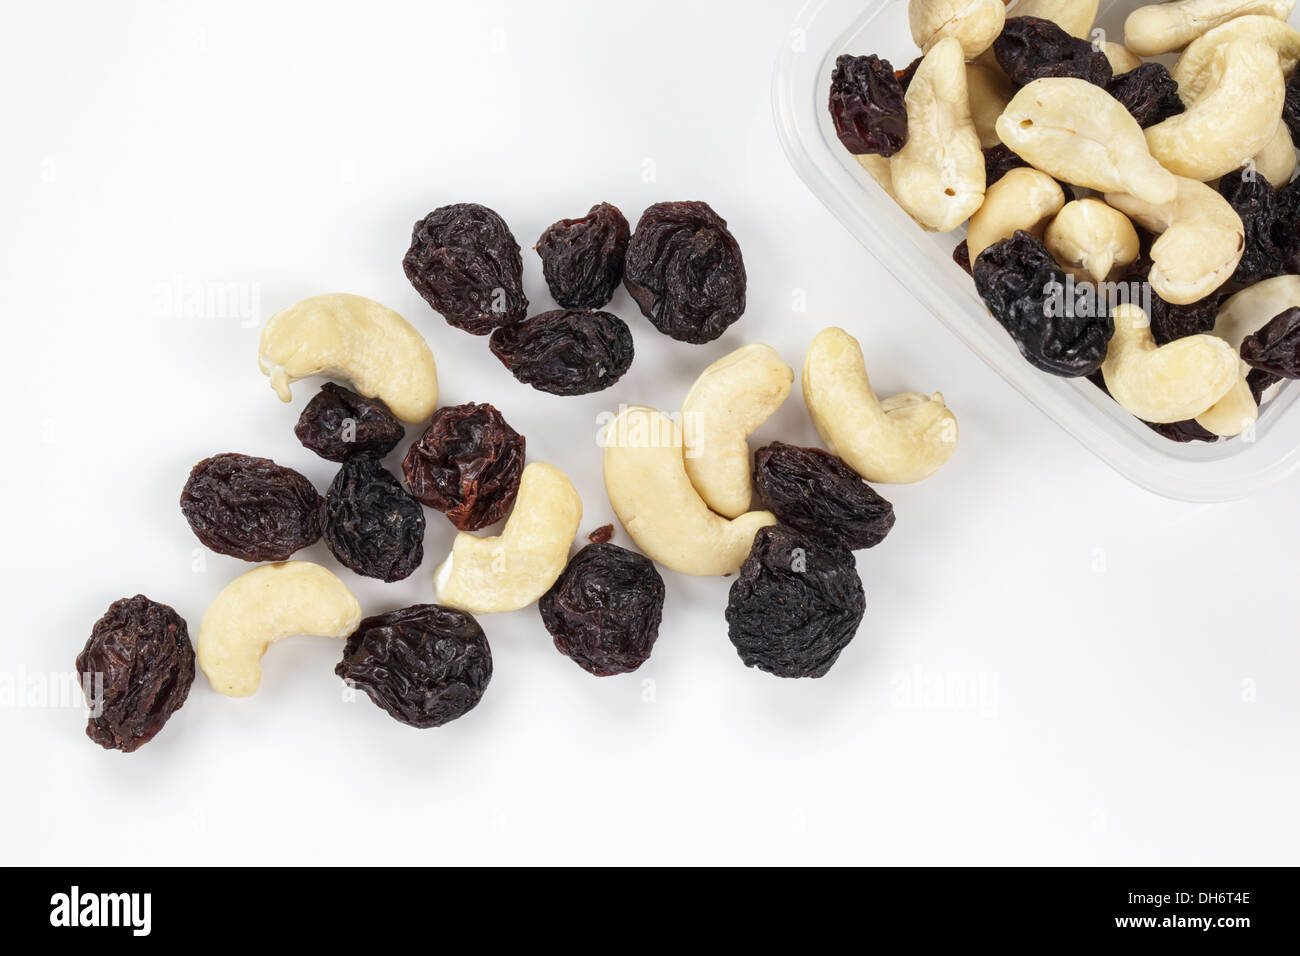 Cashew nuts and raisins on white background Stock Photo